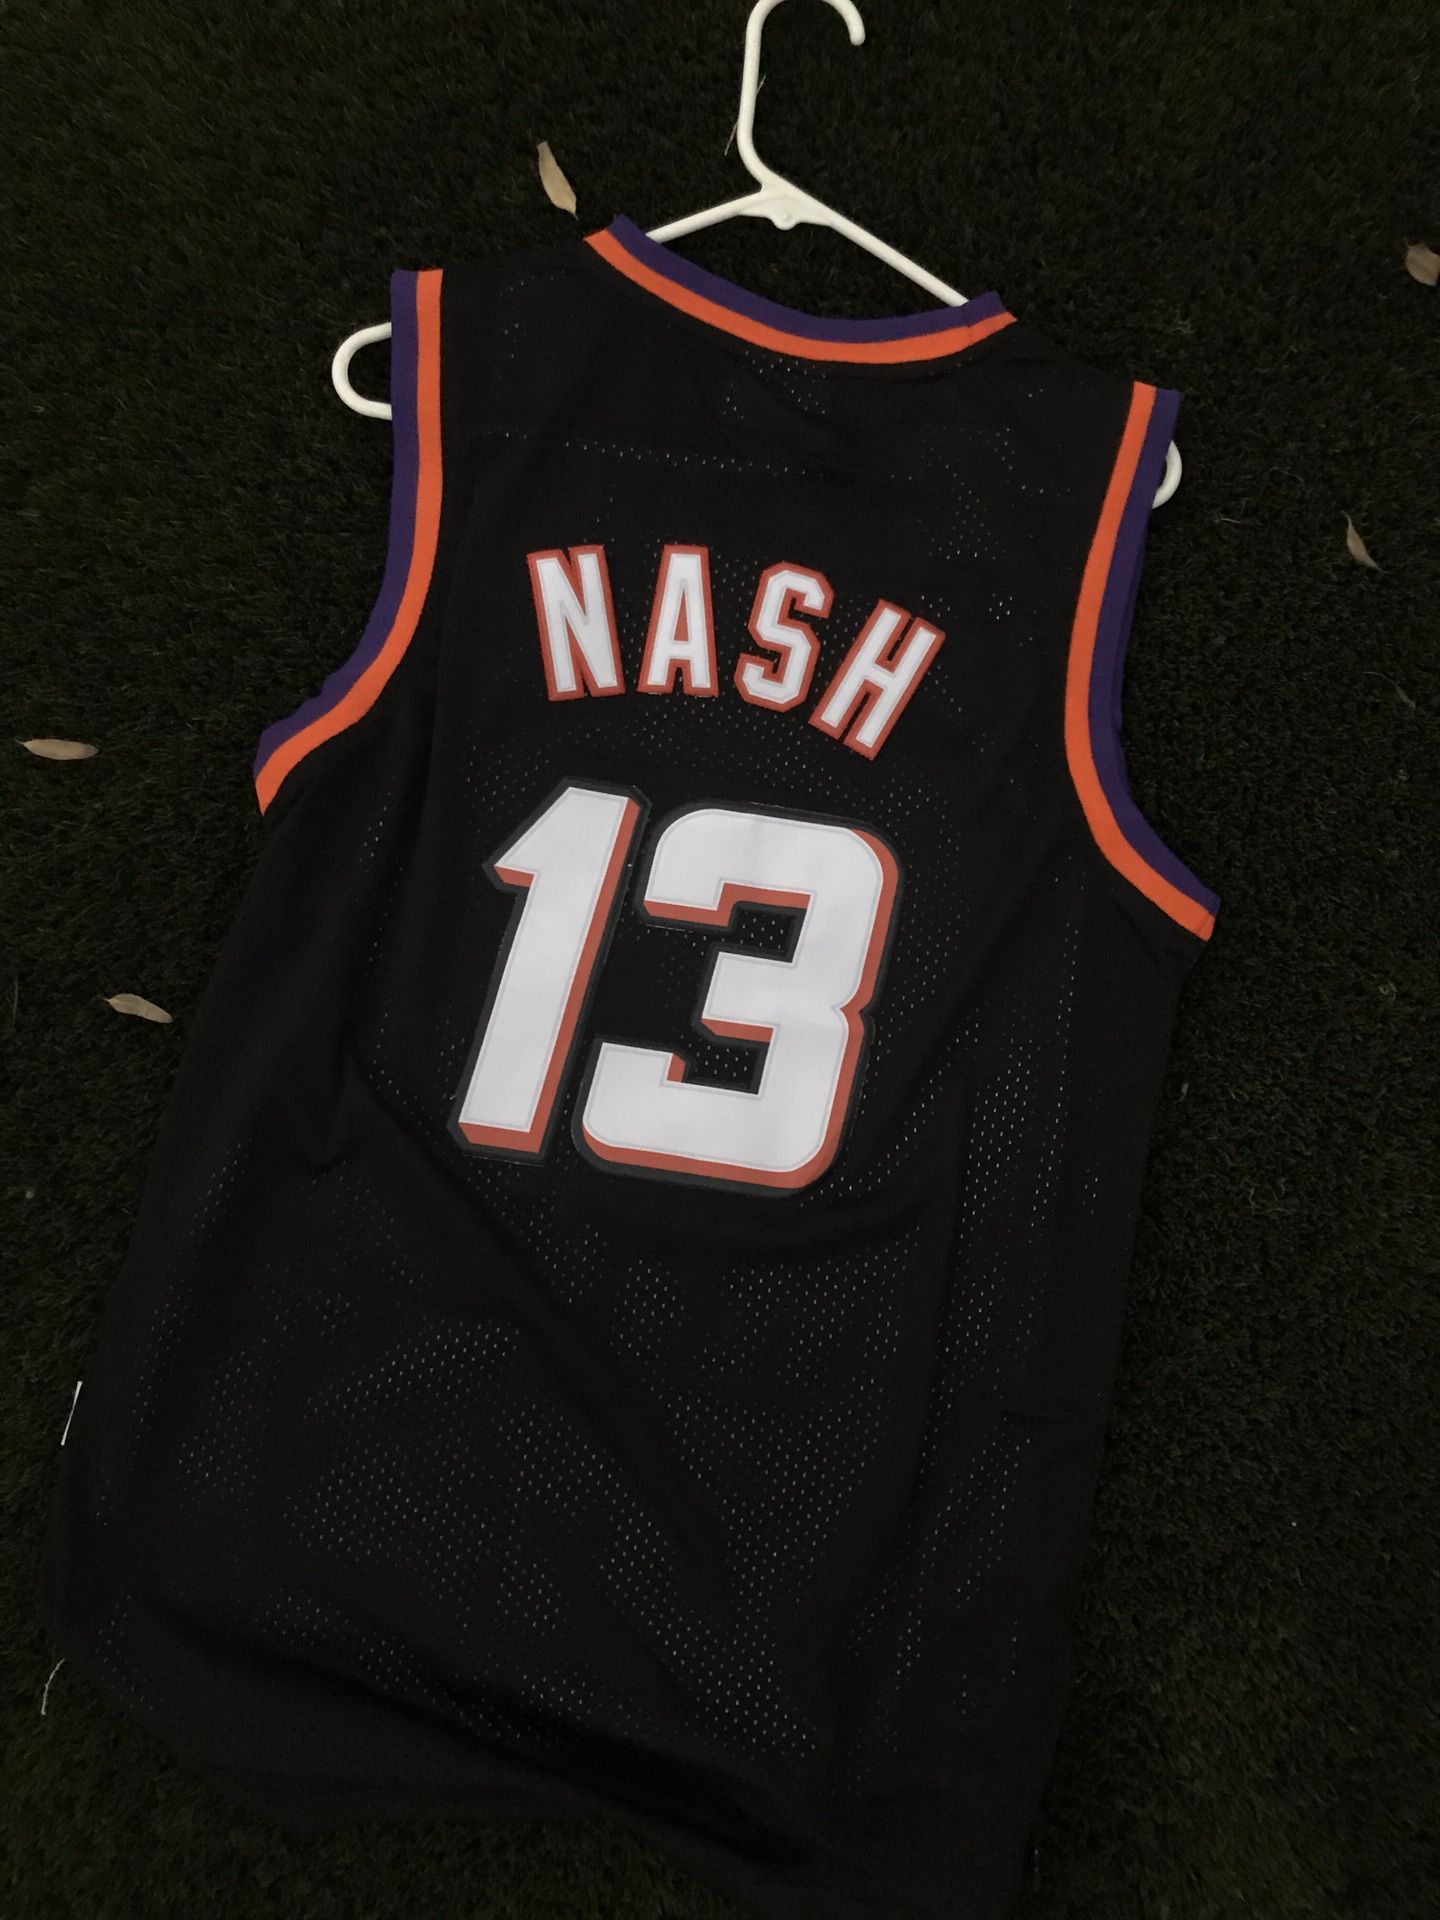 Youth L Steve Nash Reebok Phoenix Suns Jersey for Sale in New York, NY -  OfferUp